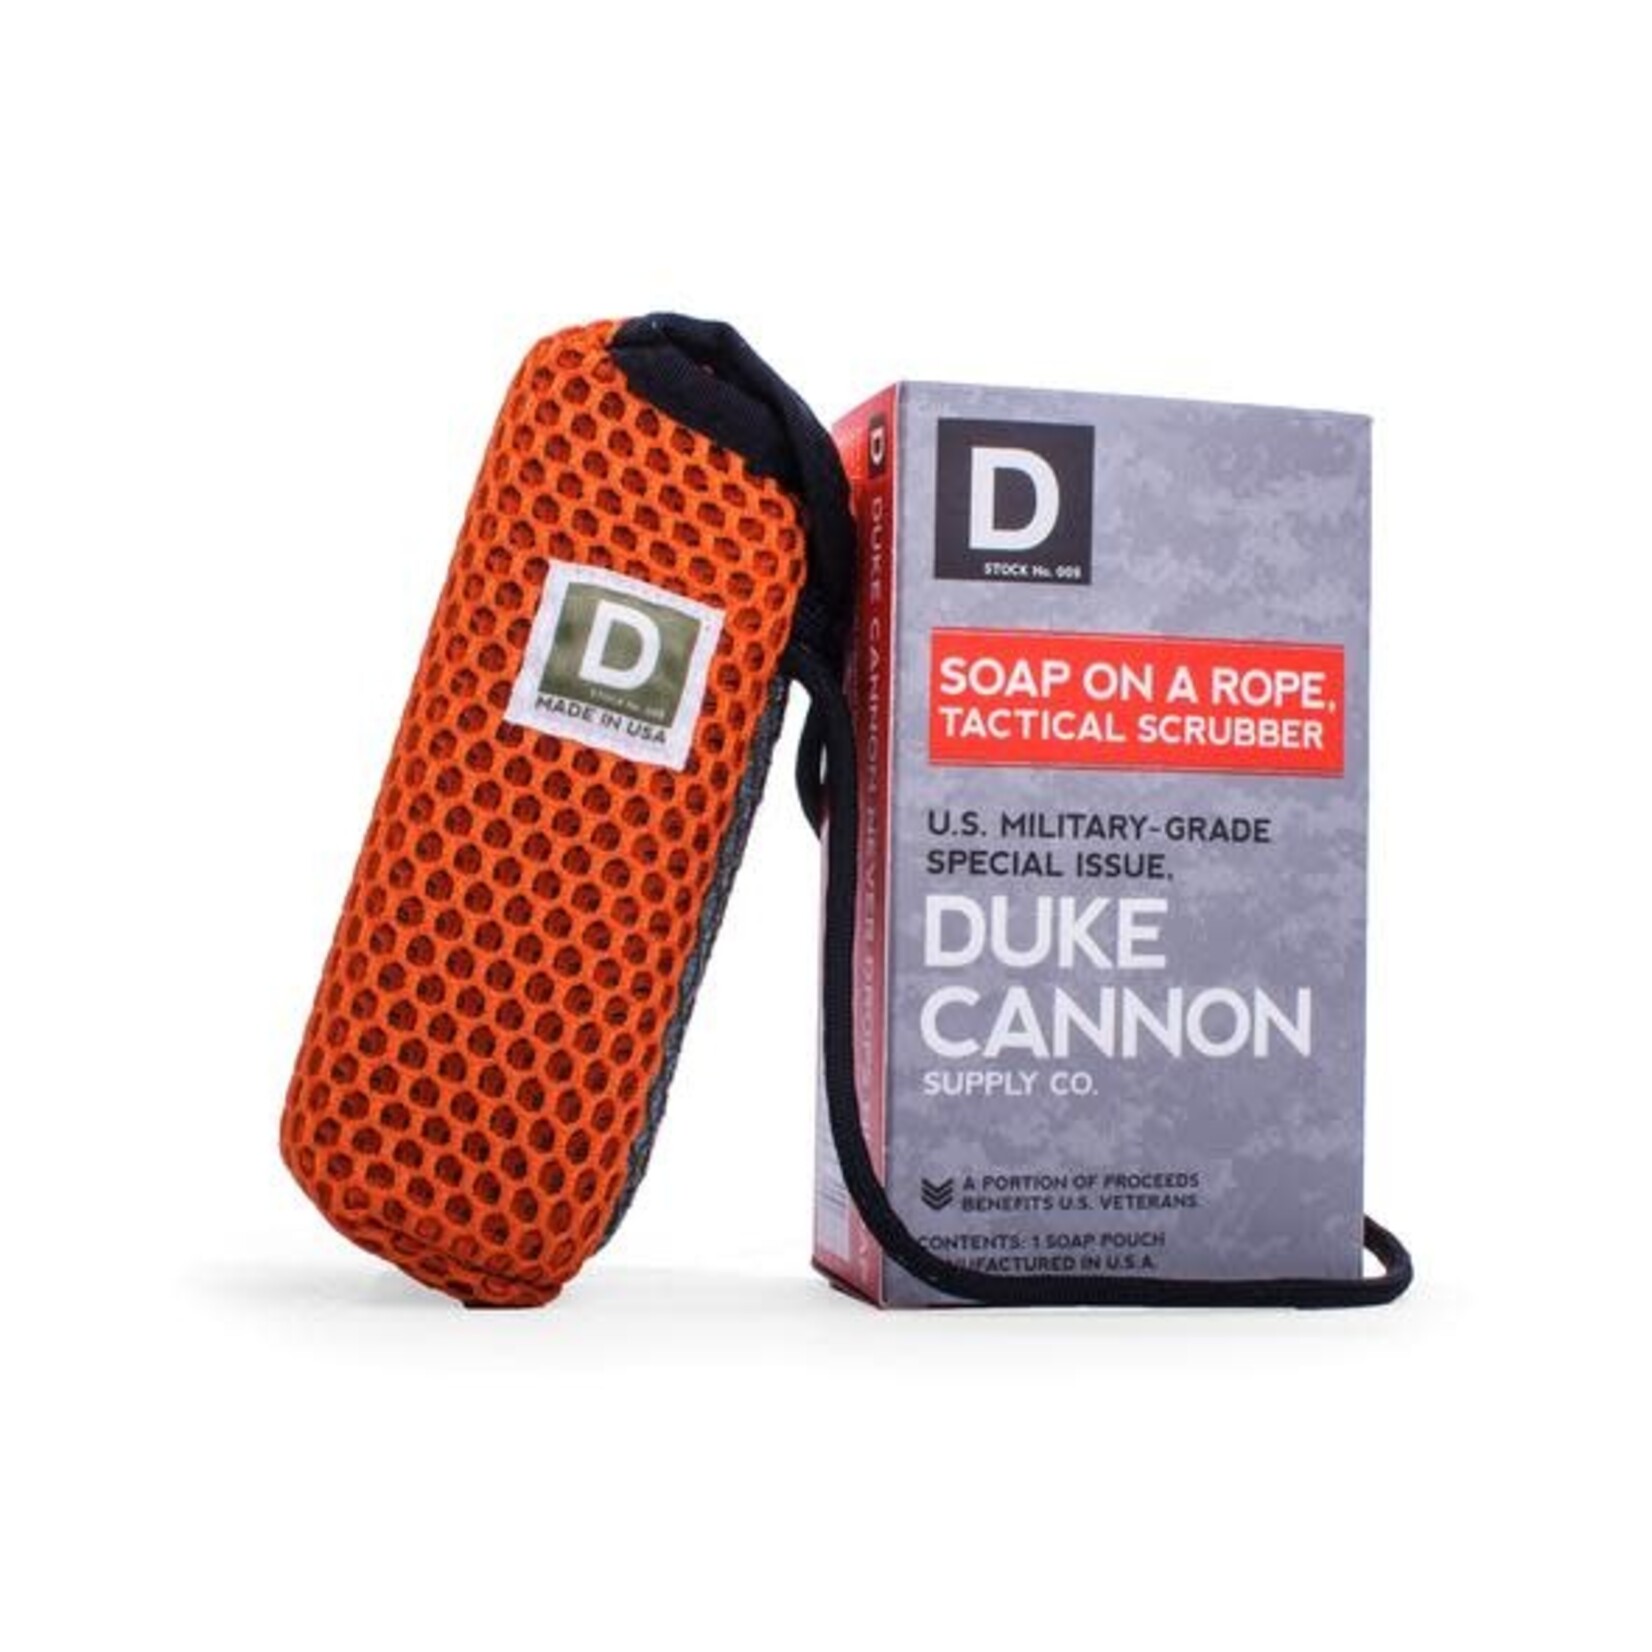 Duke Cannon Duke Cannnon Soap on a Rope Tactical Scrubber